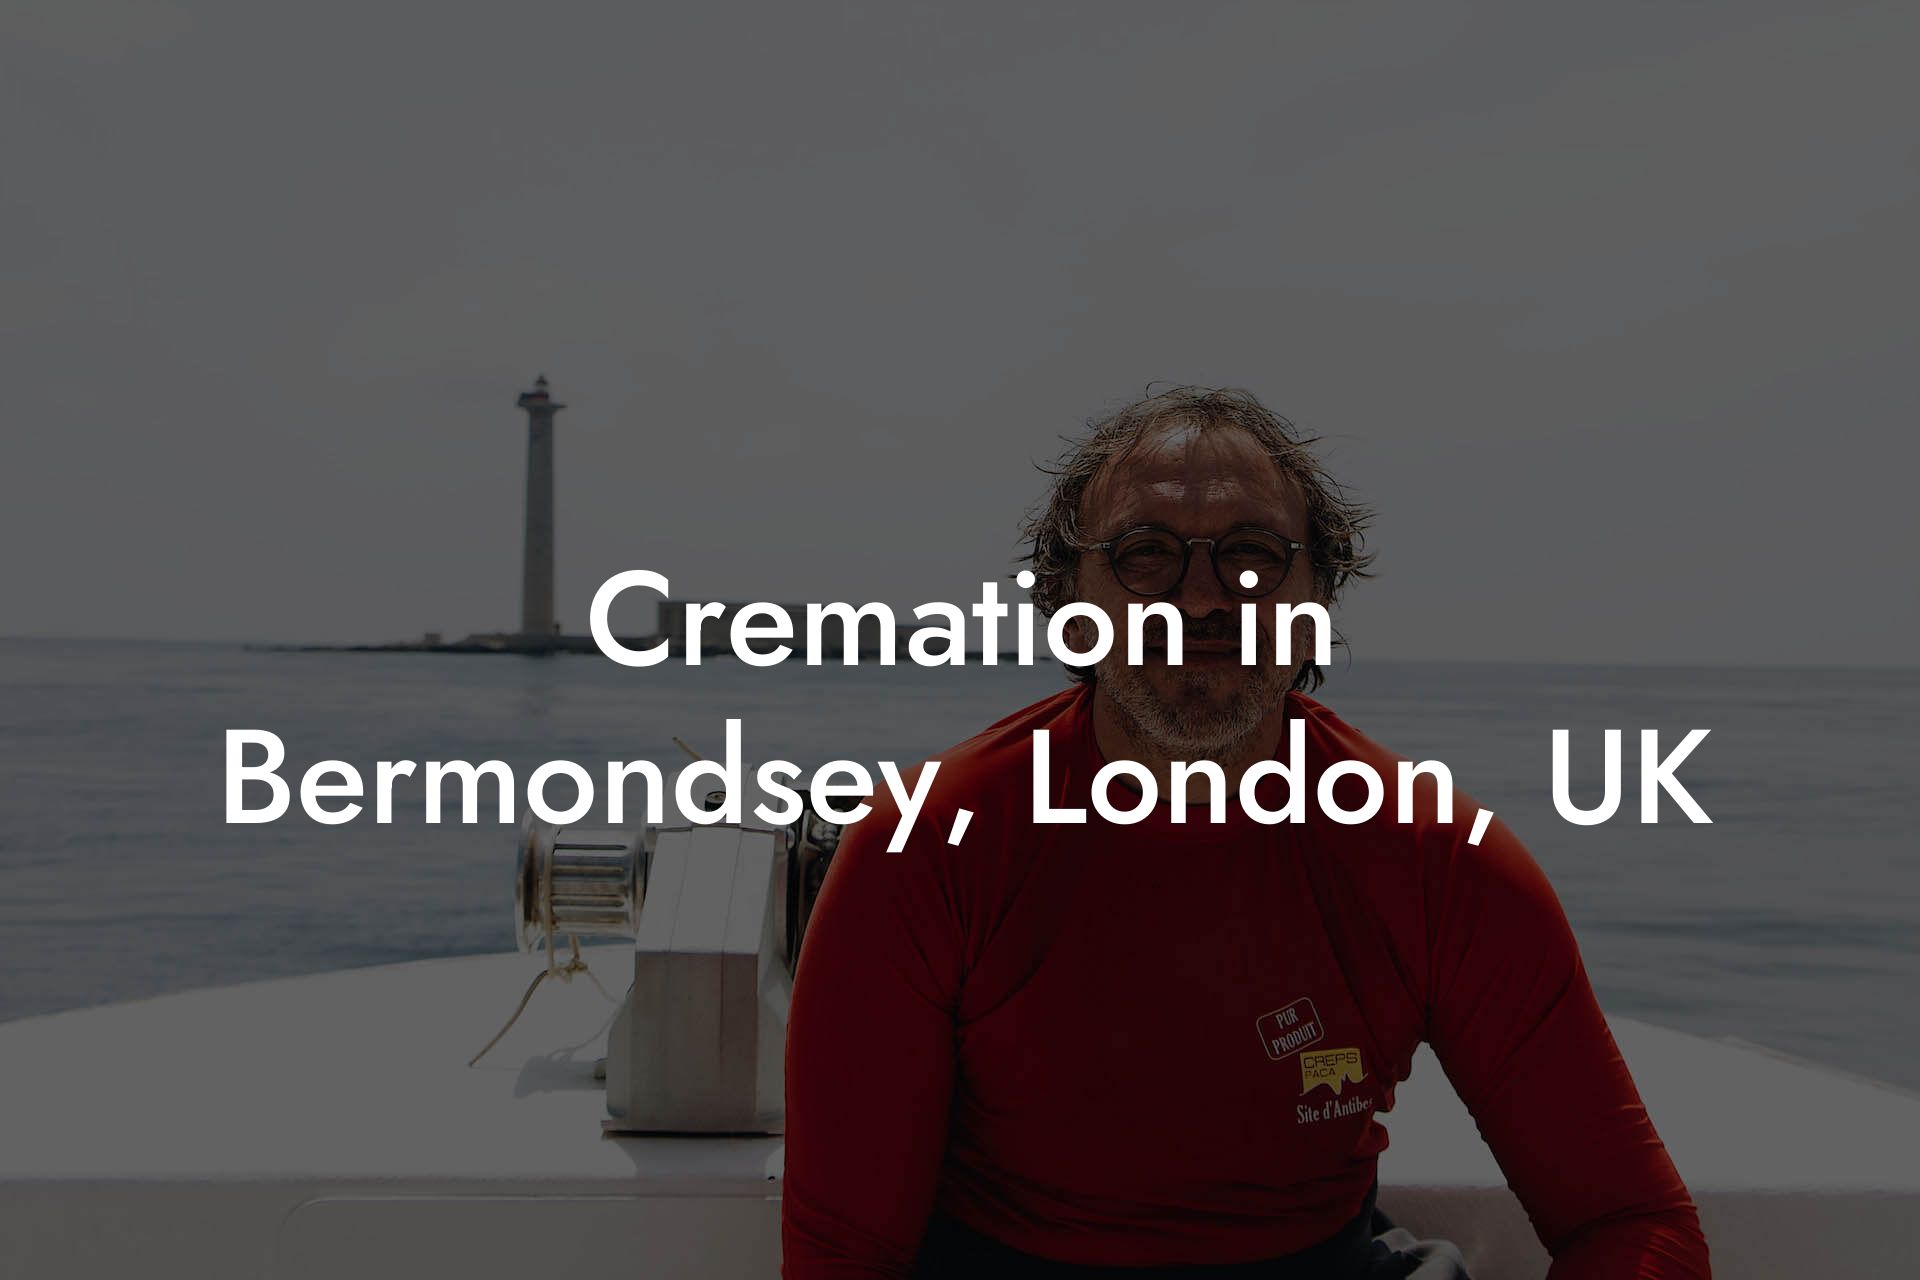 Cremation in Bermondsey, London, UK